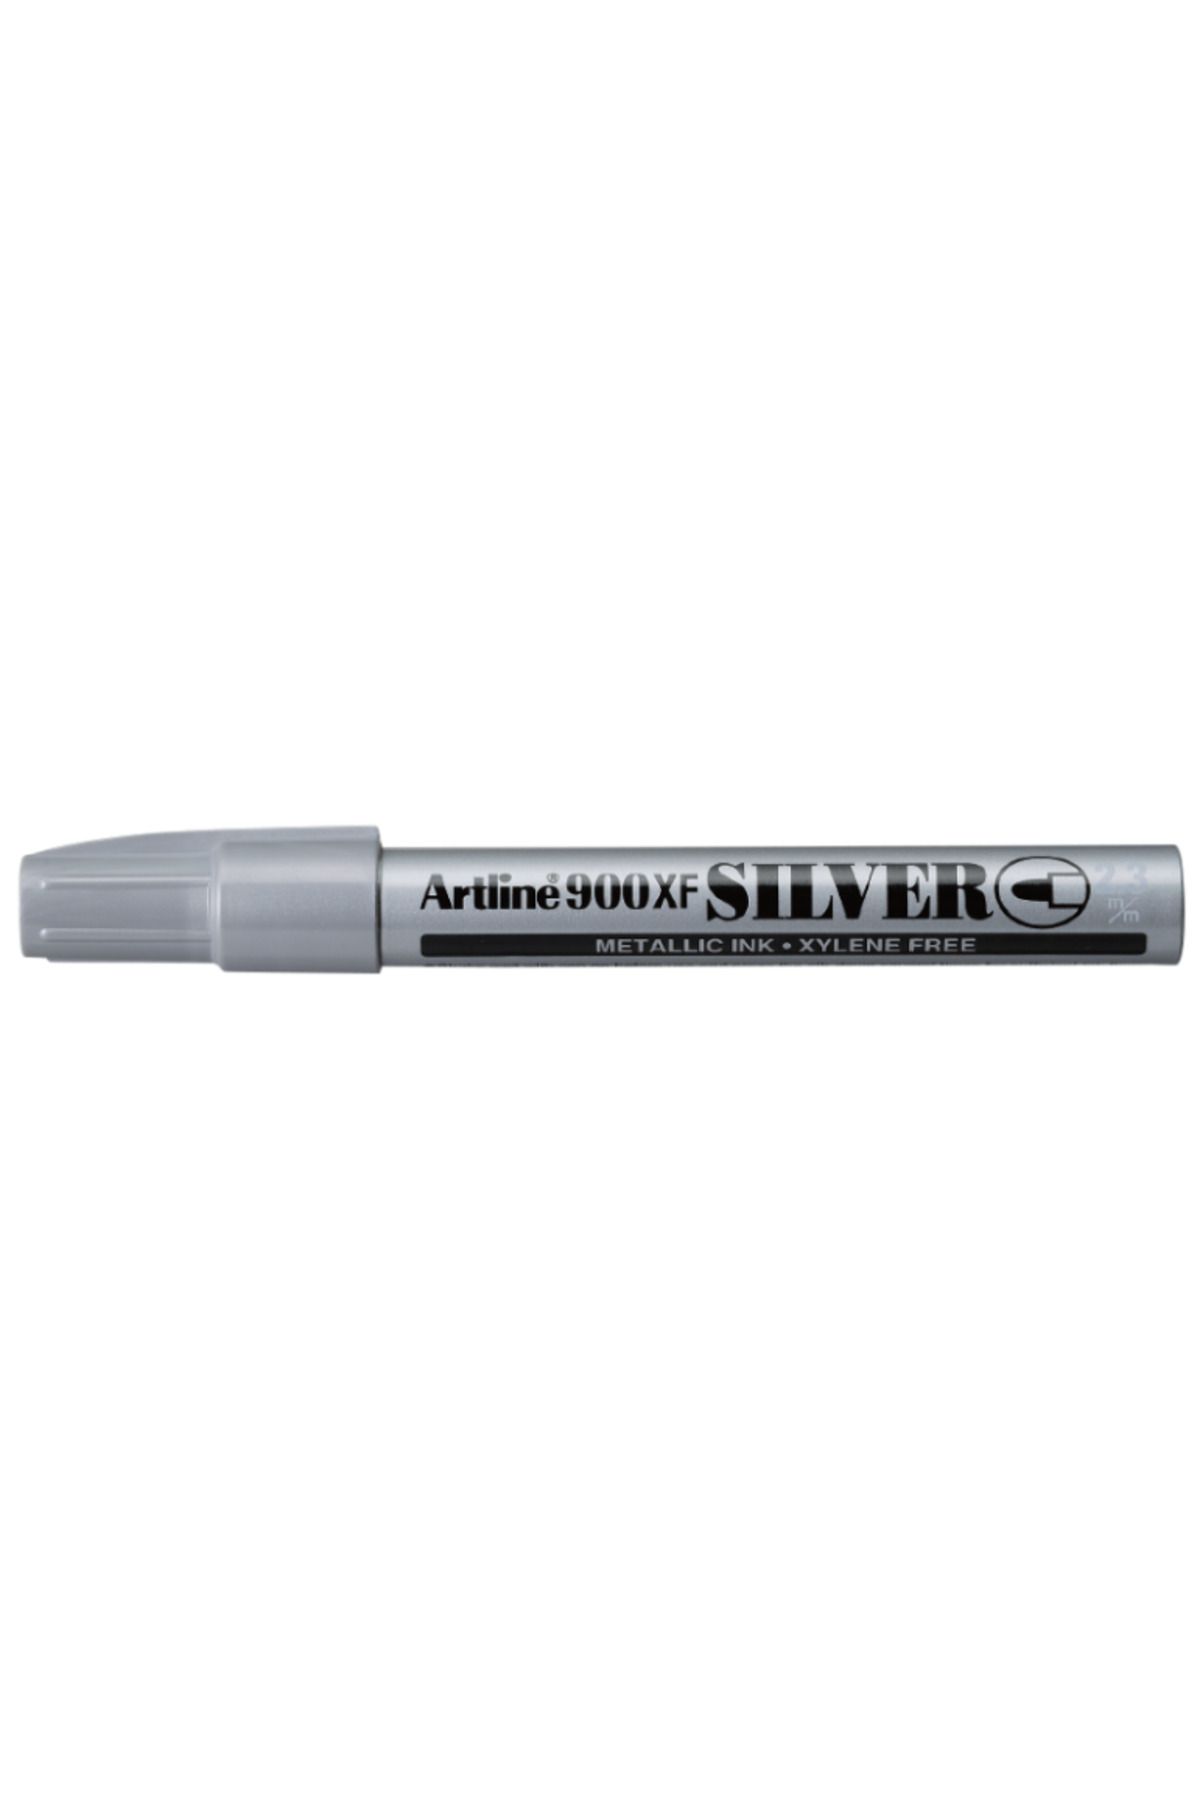 artline 900 XF Silver Gri Rötuş Kalemi